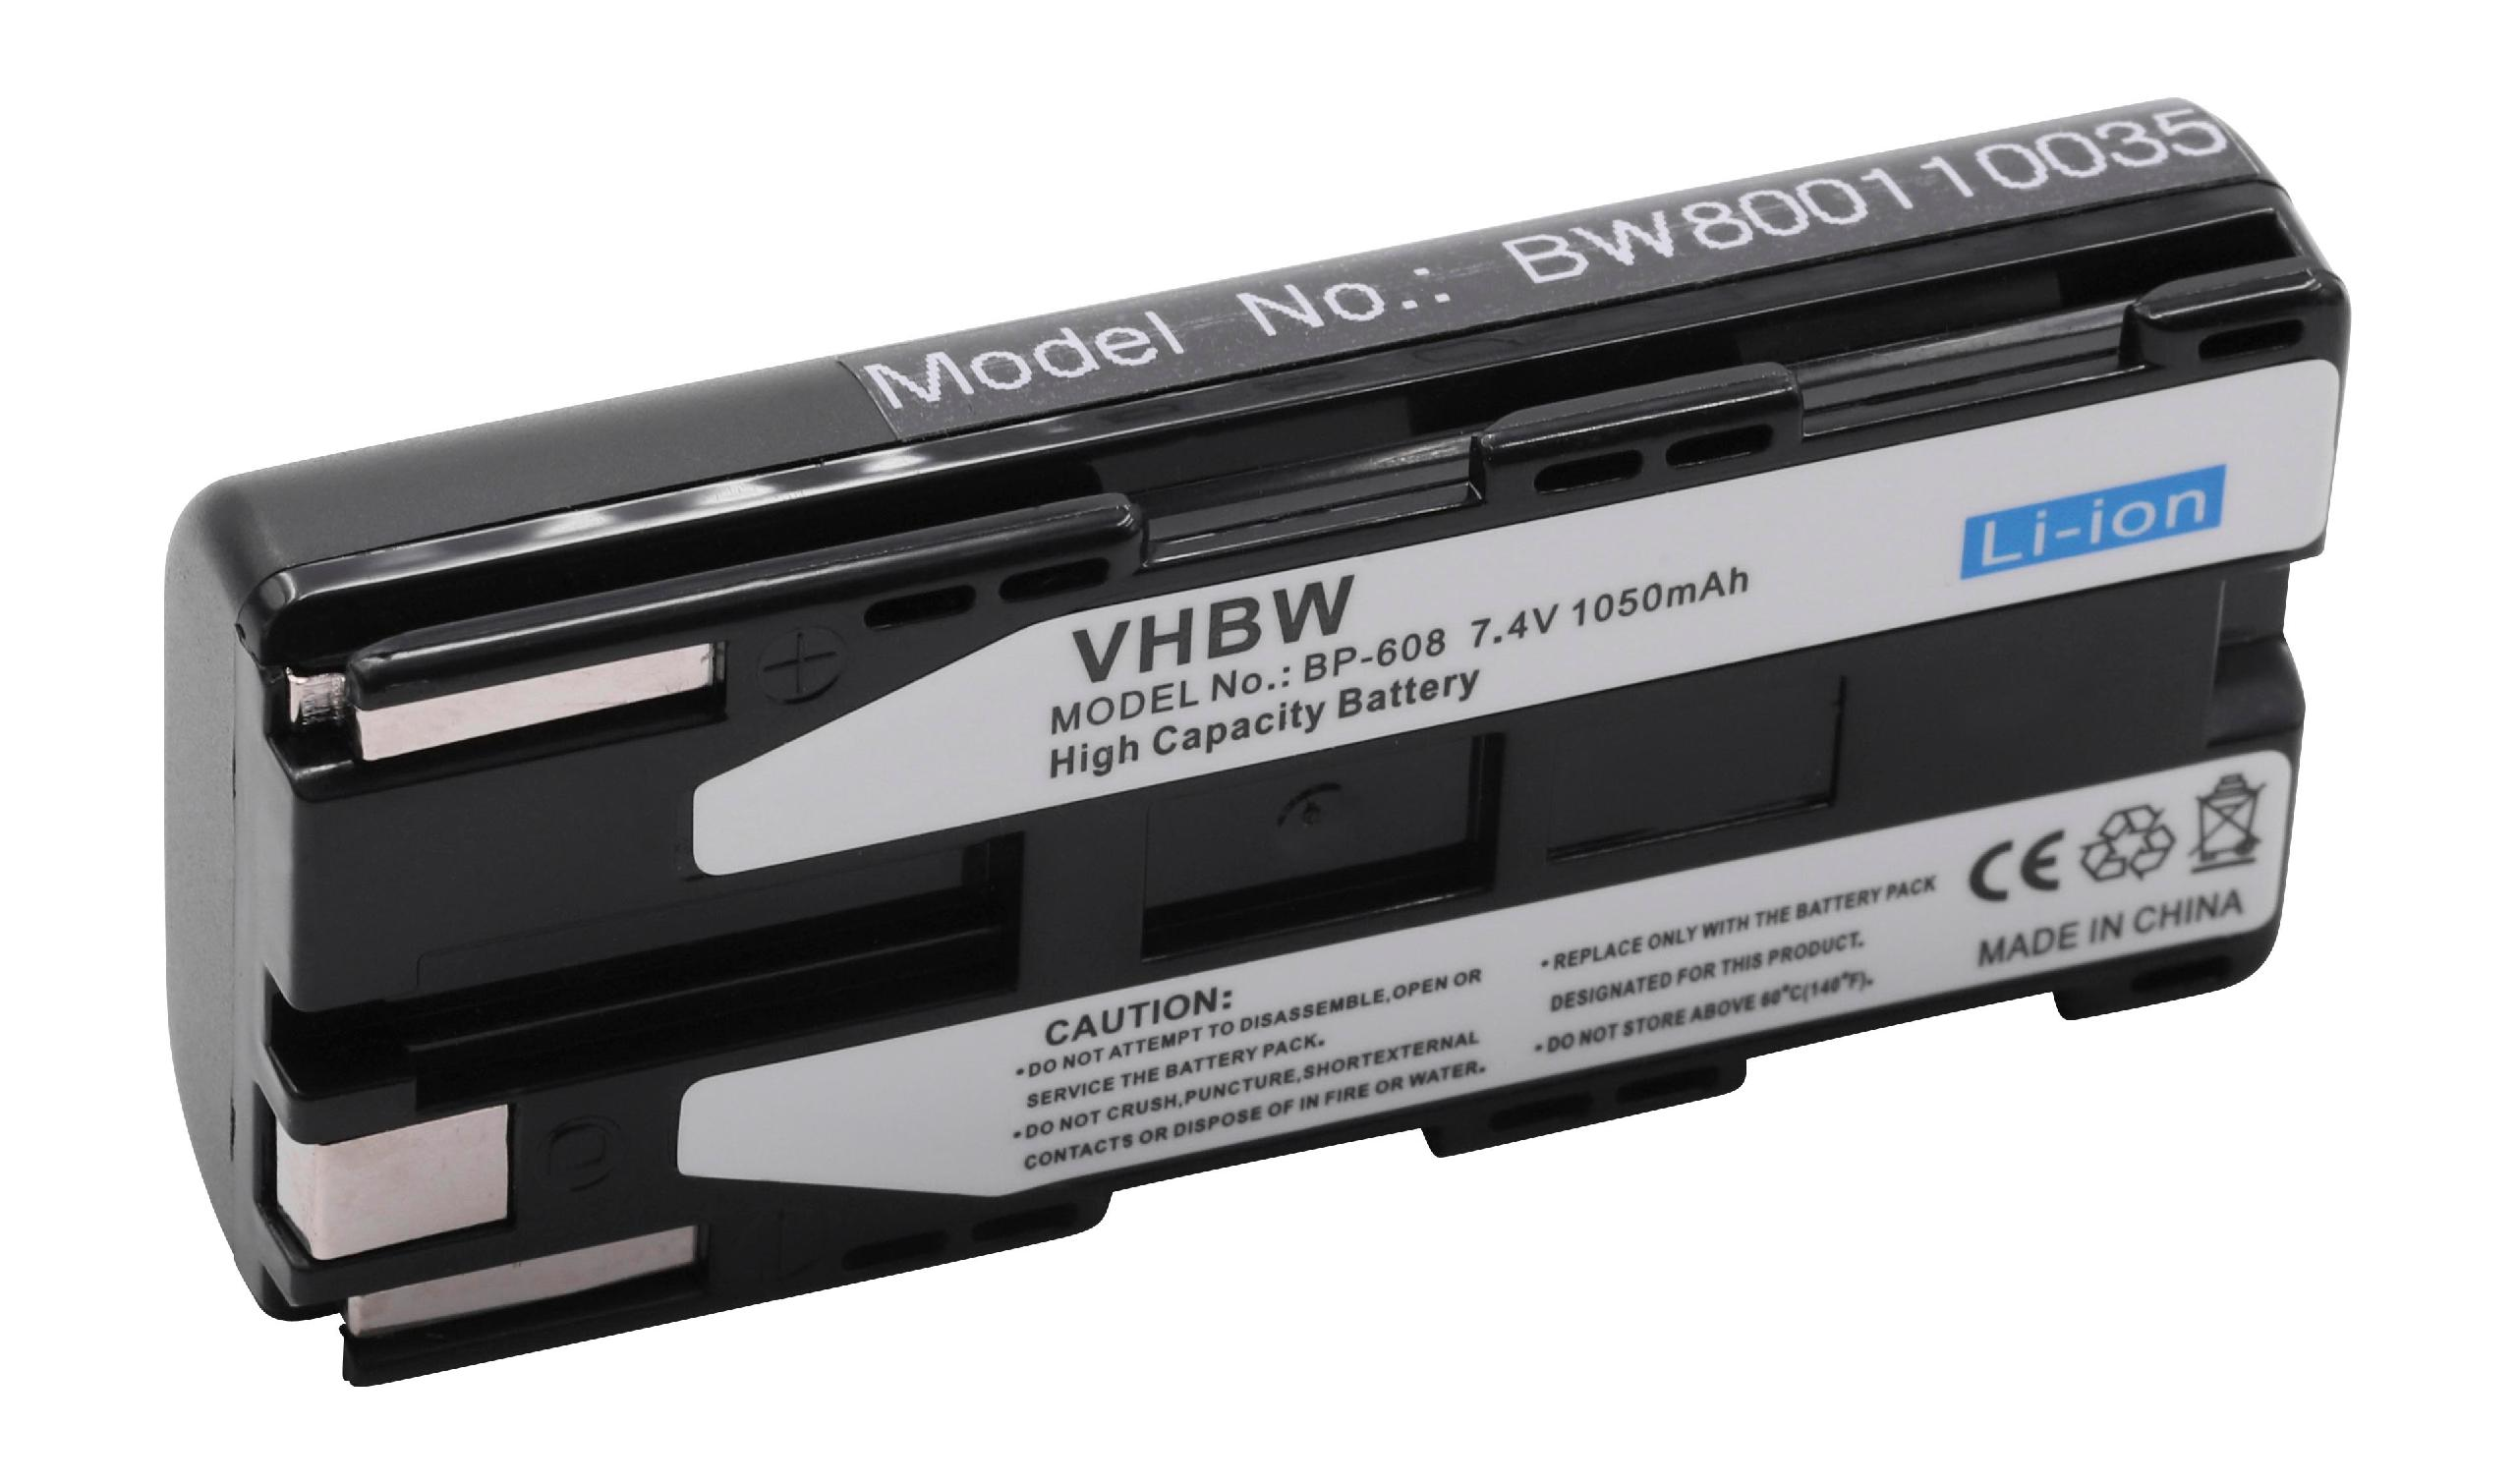 VHBW Ersatz für Canon BP-608, Akku 1050 für Videokamera, - Volt, Li-Ion BP-608A 7.4